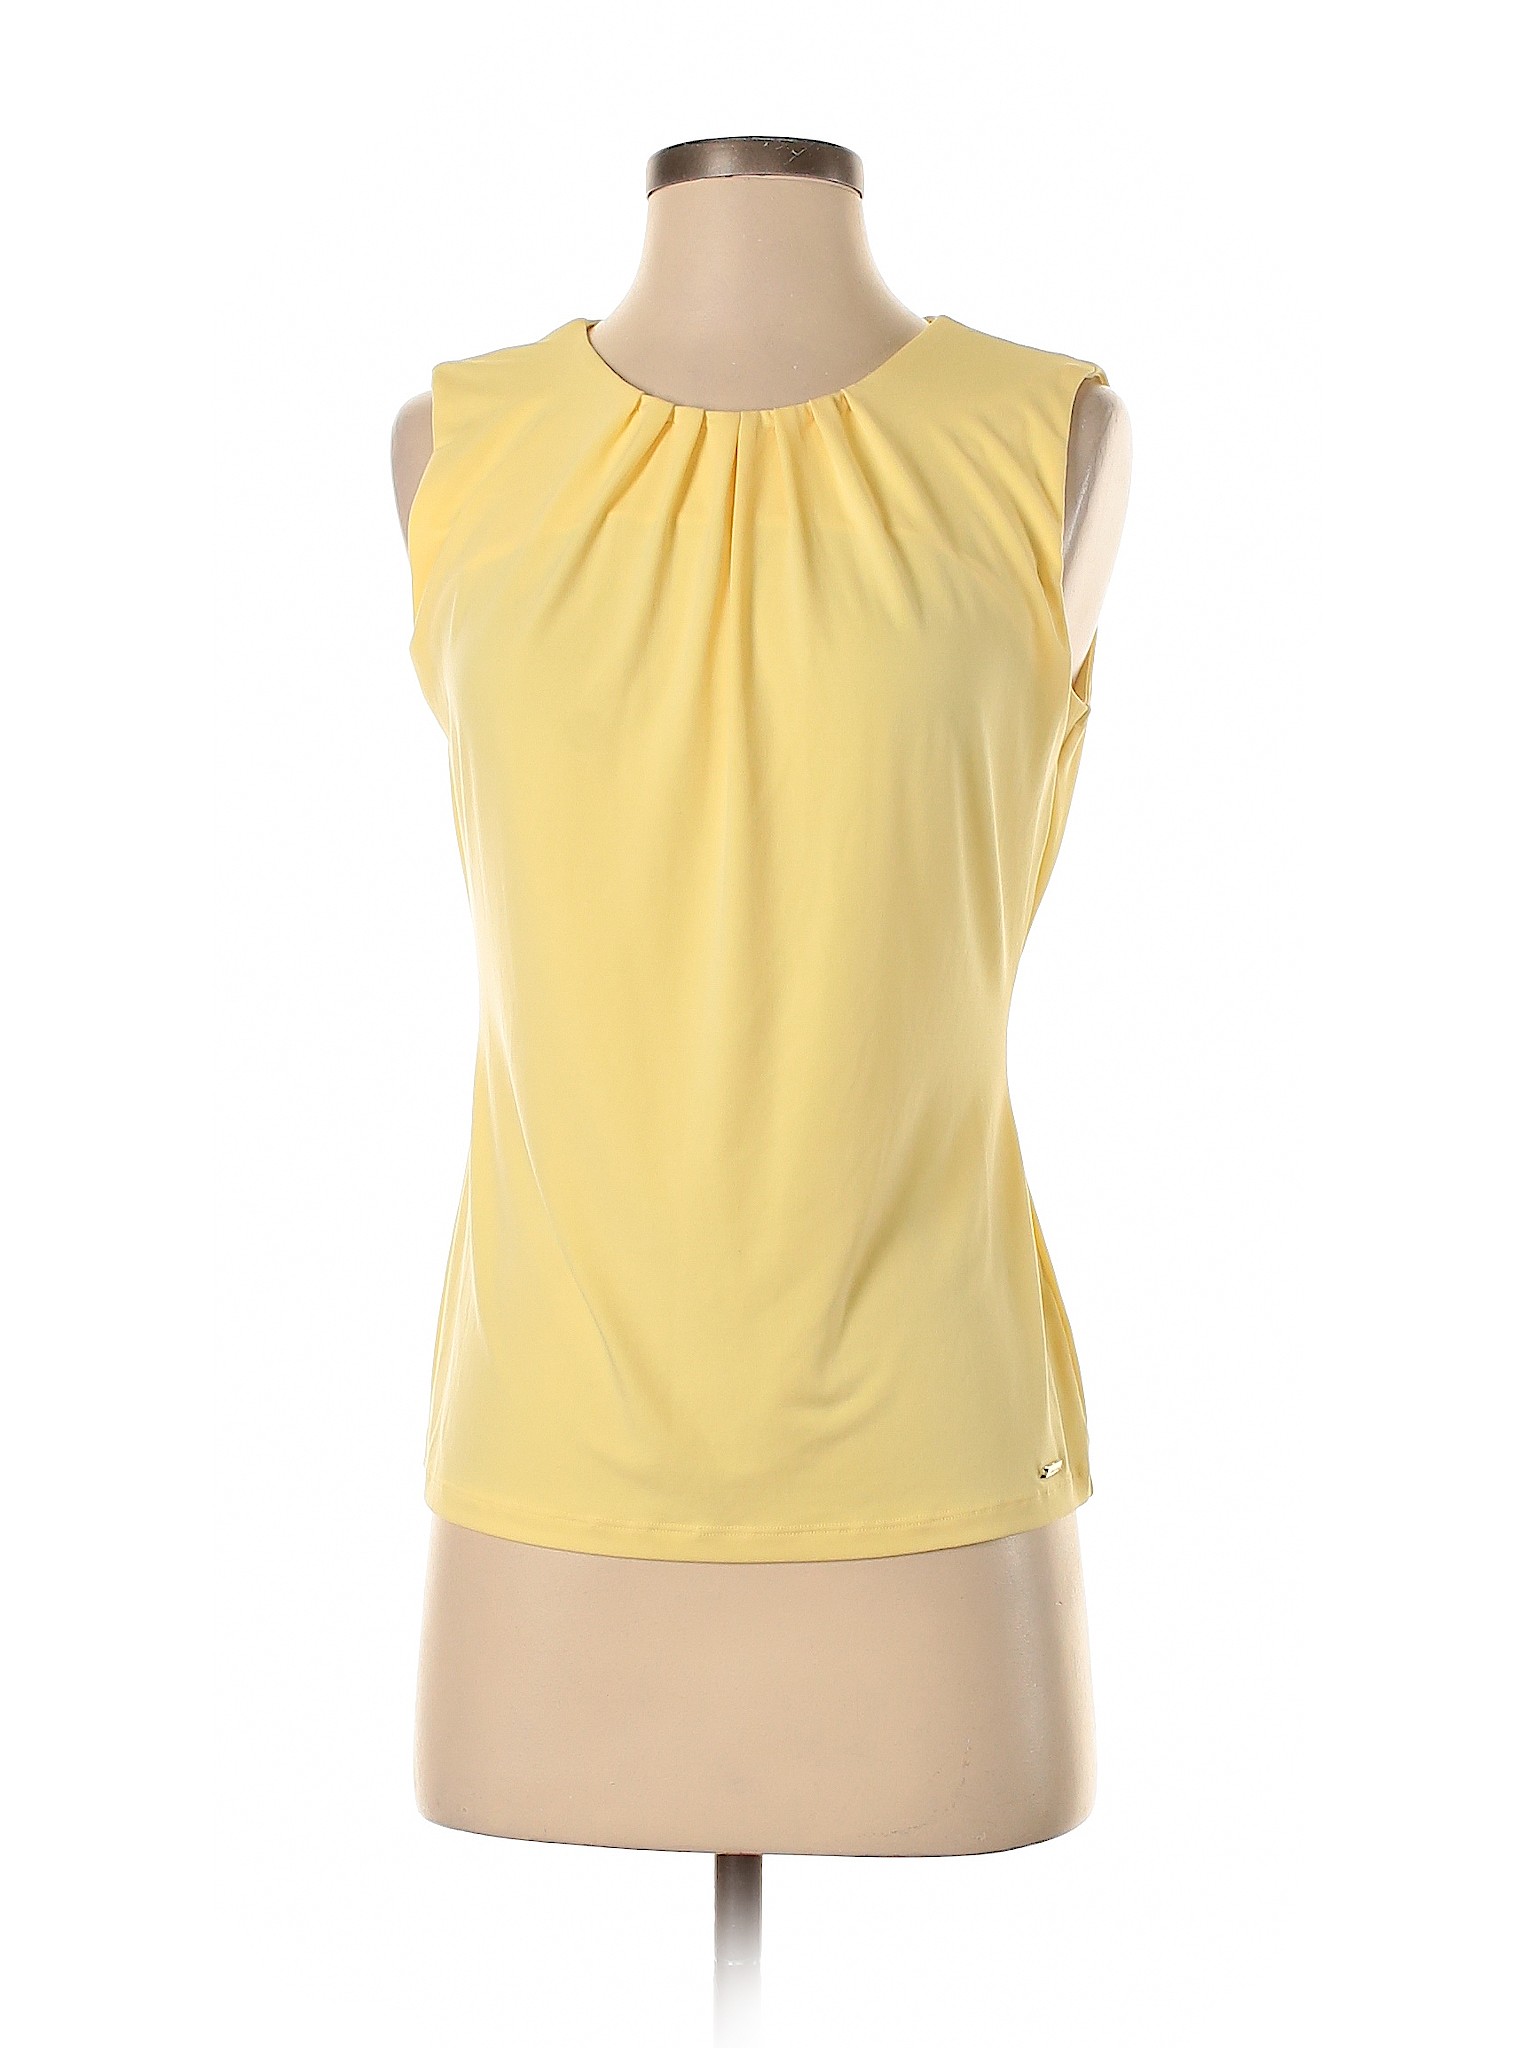 Calvin Klein Women Yellow Sleeveless Top S | eBay